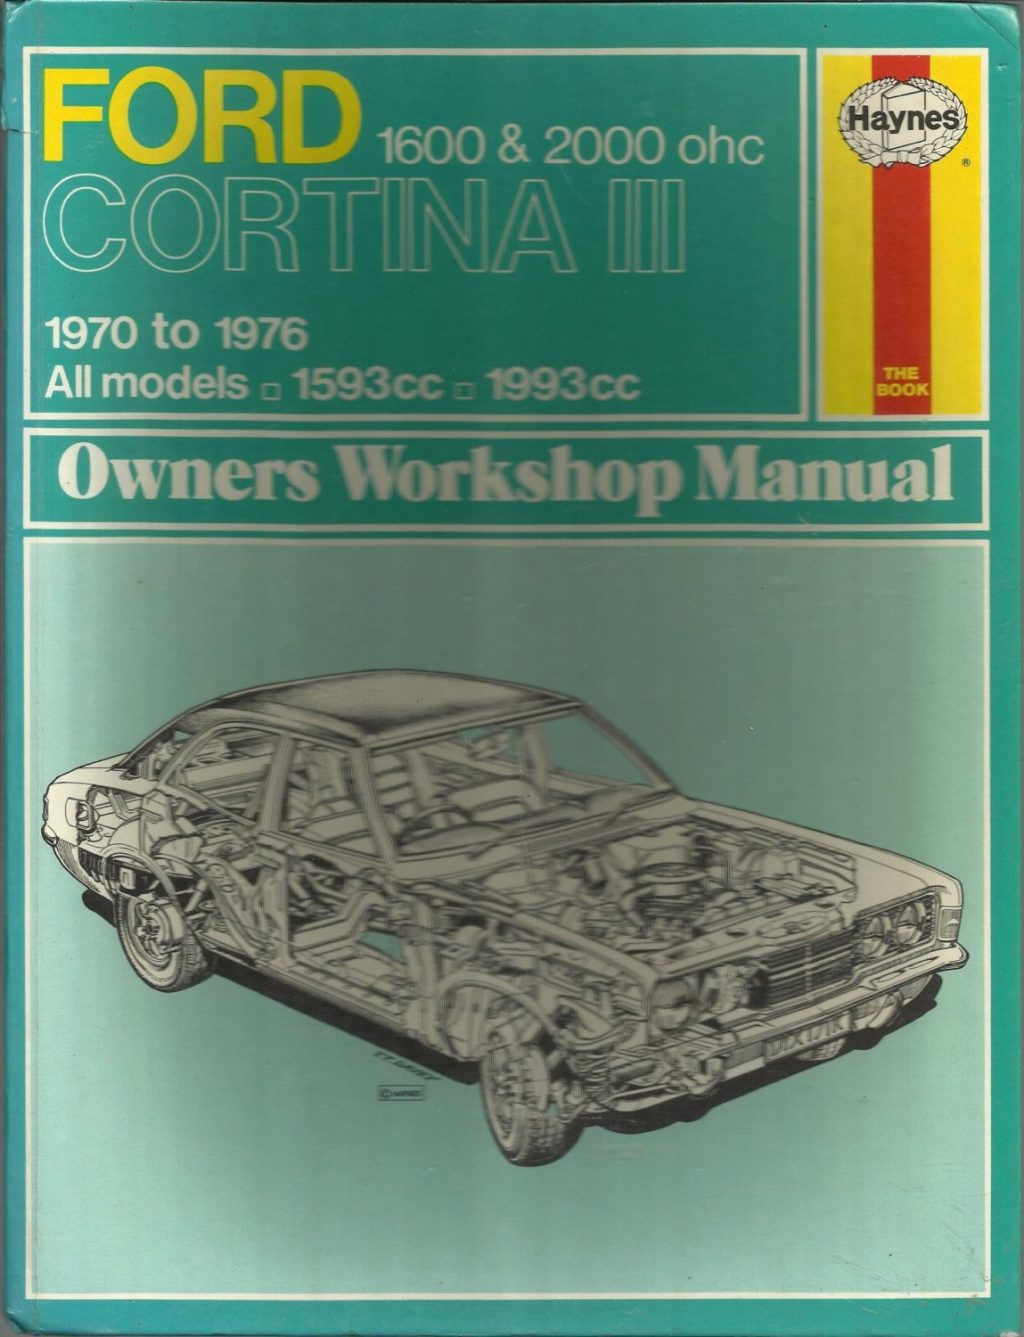 Ford Cortina Mk III Owner’s Workshop Manual / Car Handbook – 1970 to 1976 / EVE